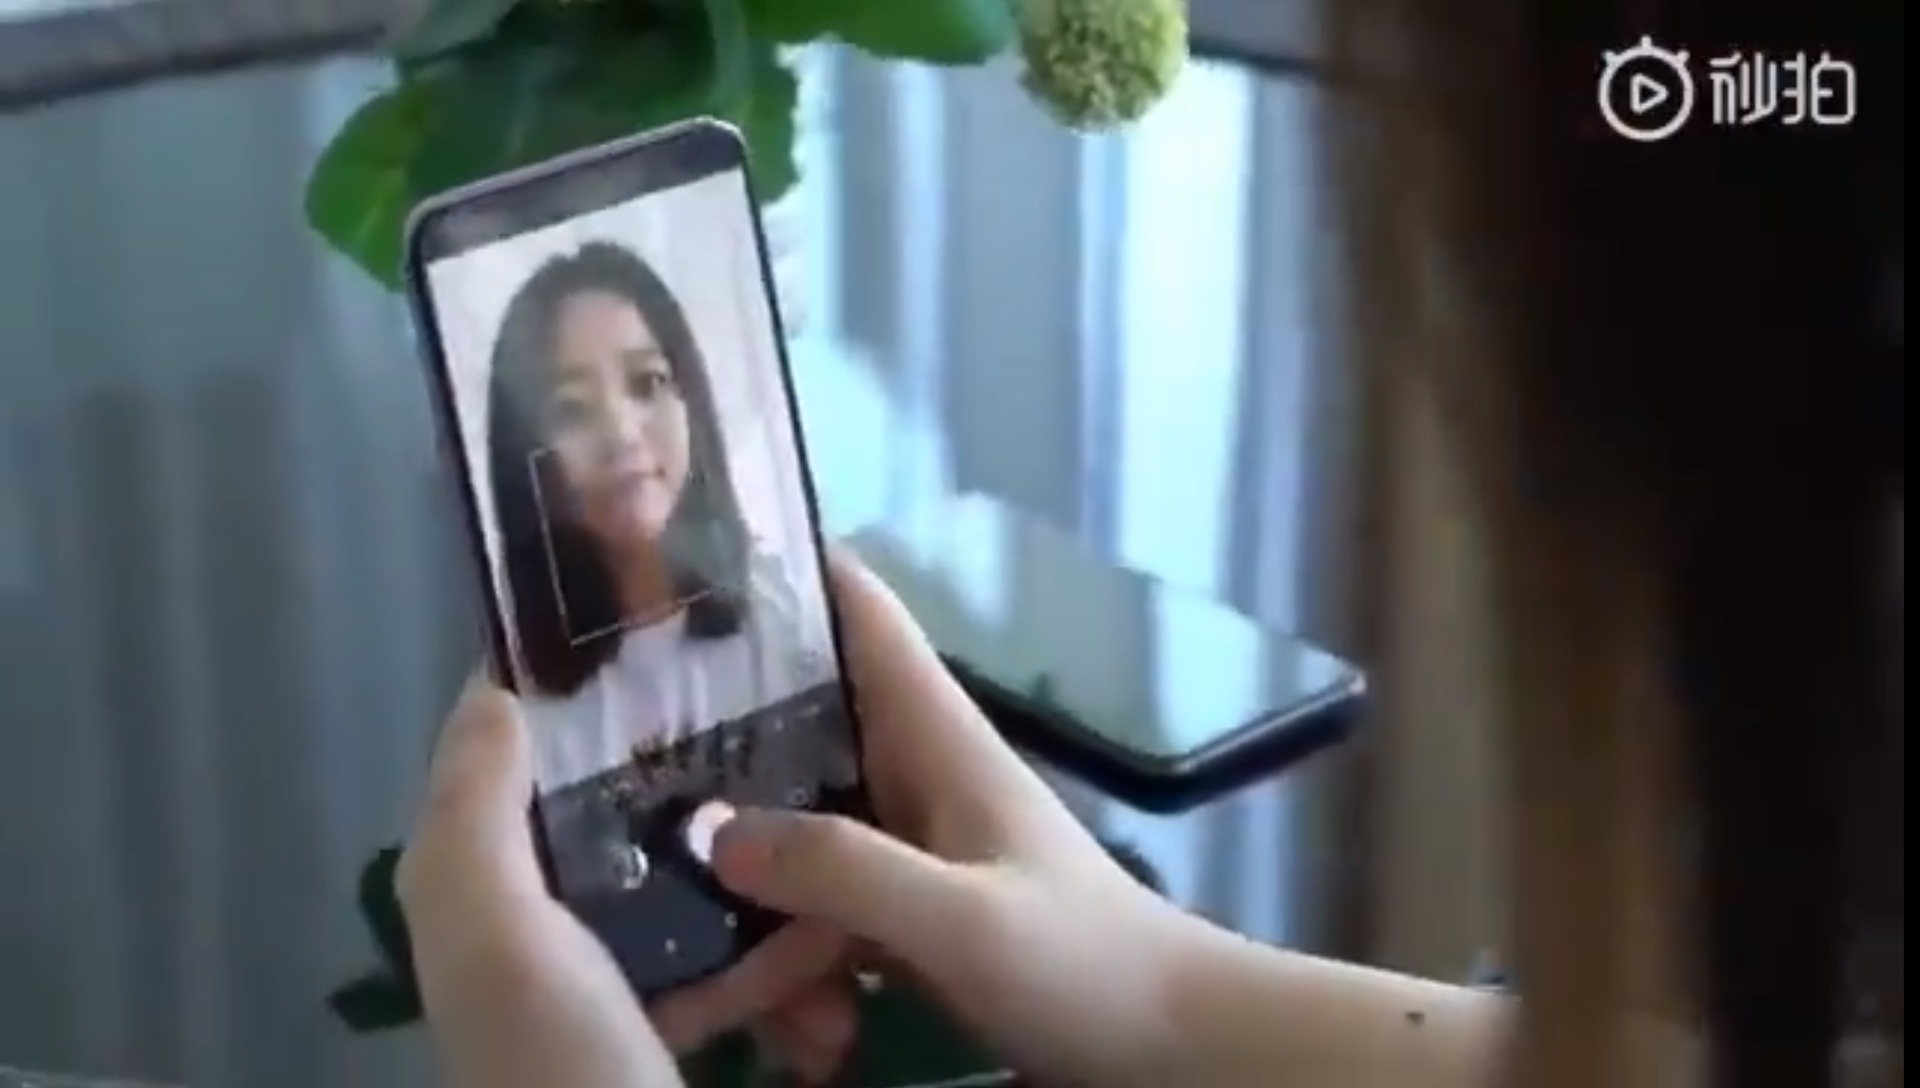 Xiaomi Mi 9 with under screen camera taking a selfie.